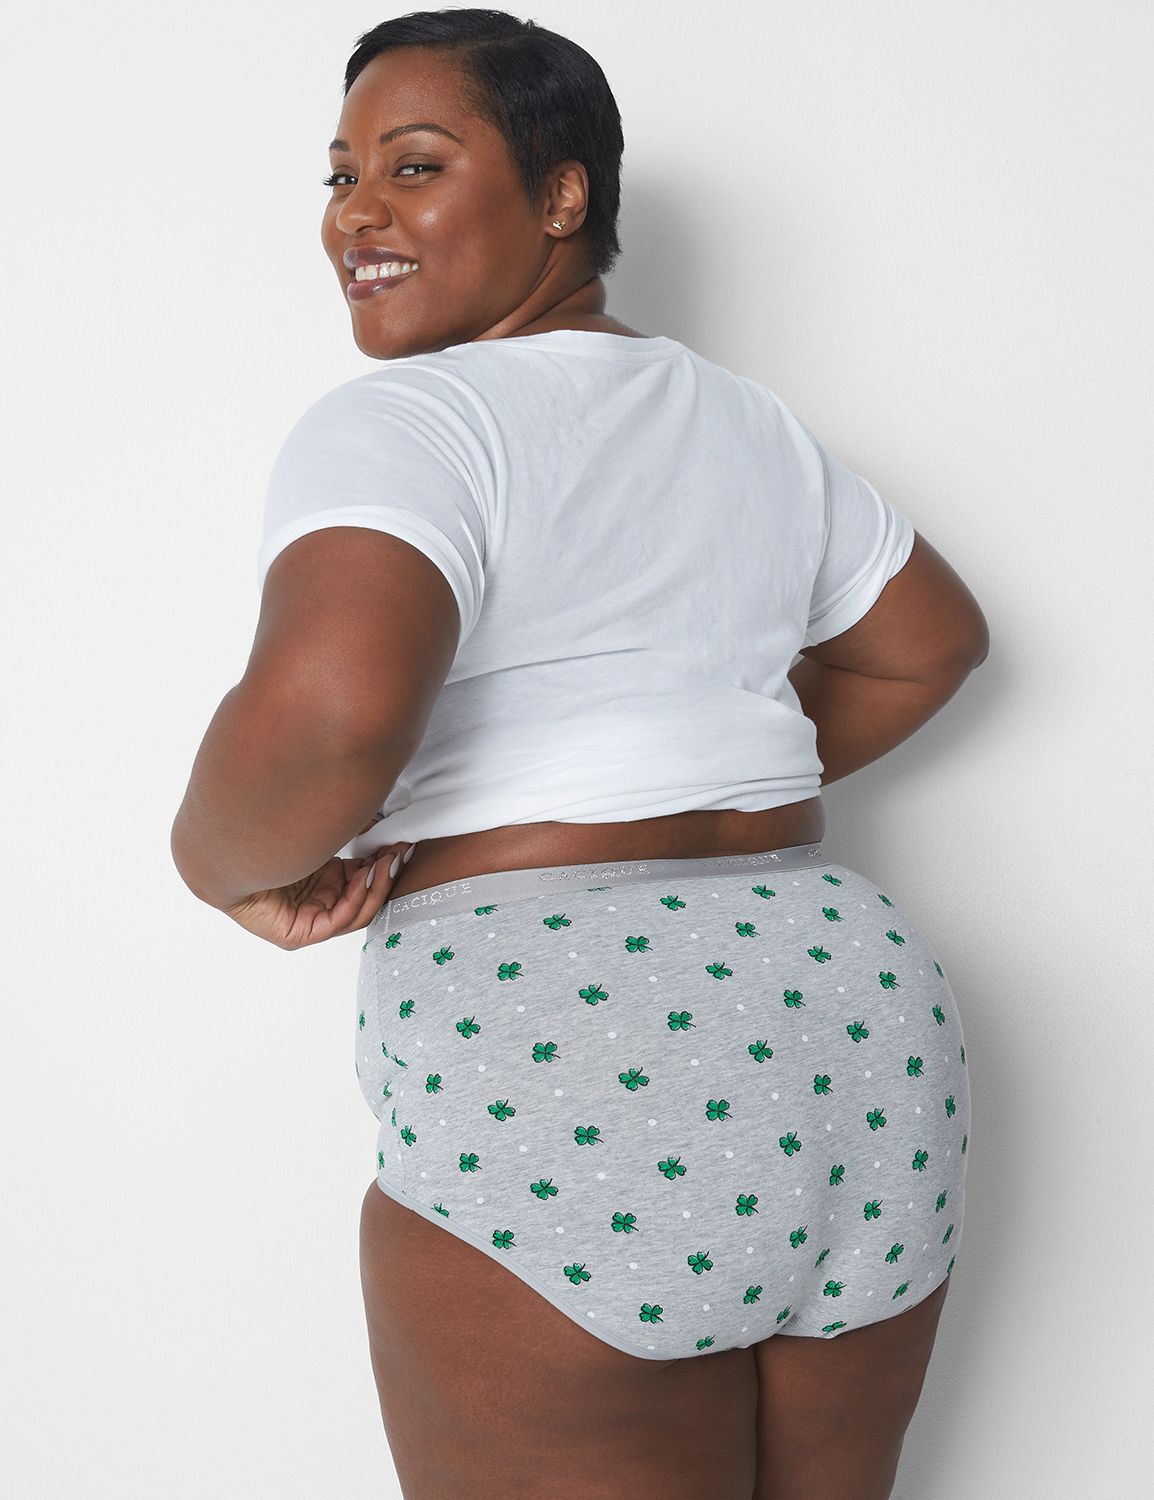 Cacique Lane Bryant Line Green Polka Dot Women's High Leg Panties